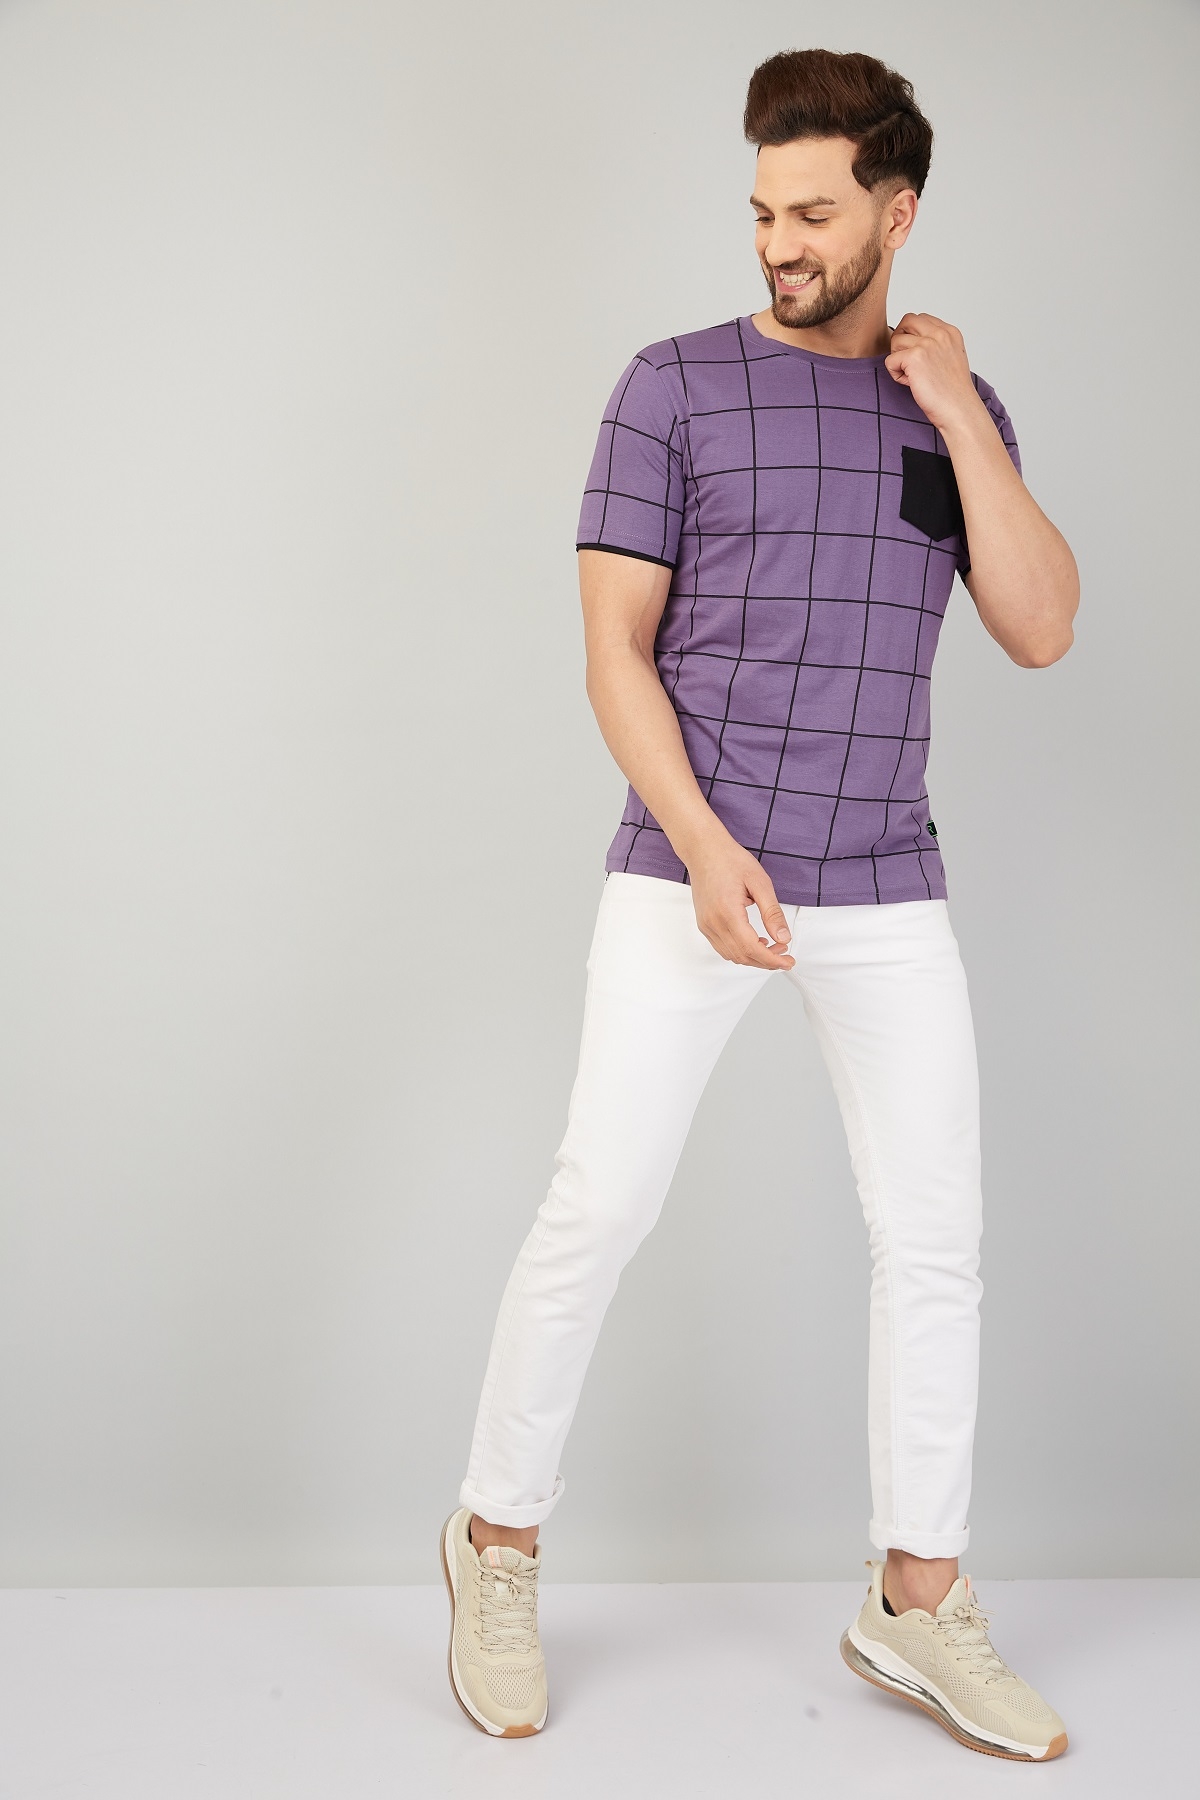 RodZen | Round neck Half Sleeve Purple All Over Printed Cotton Tshirt For Men & Boys 3